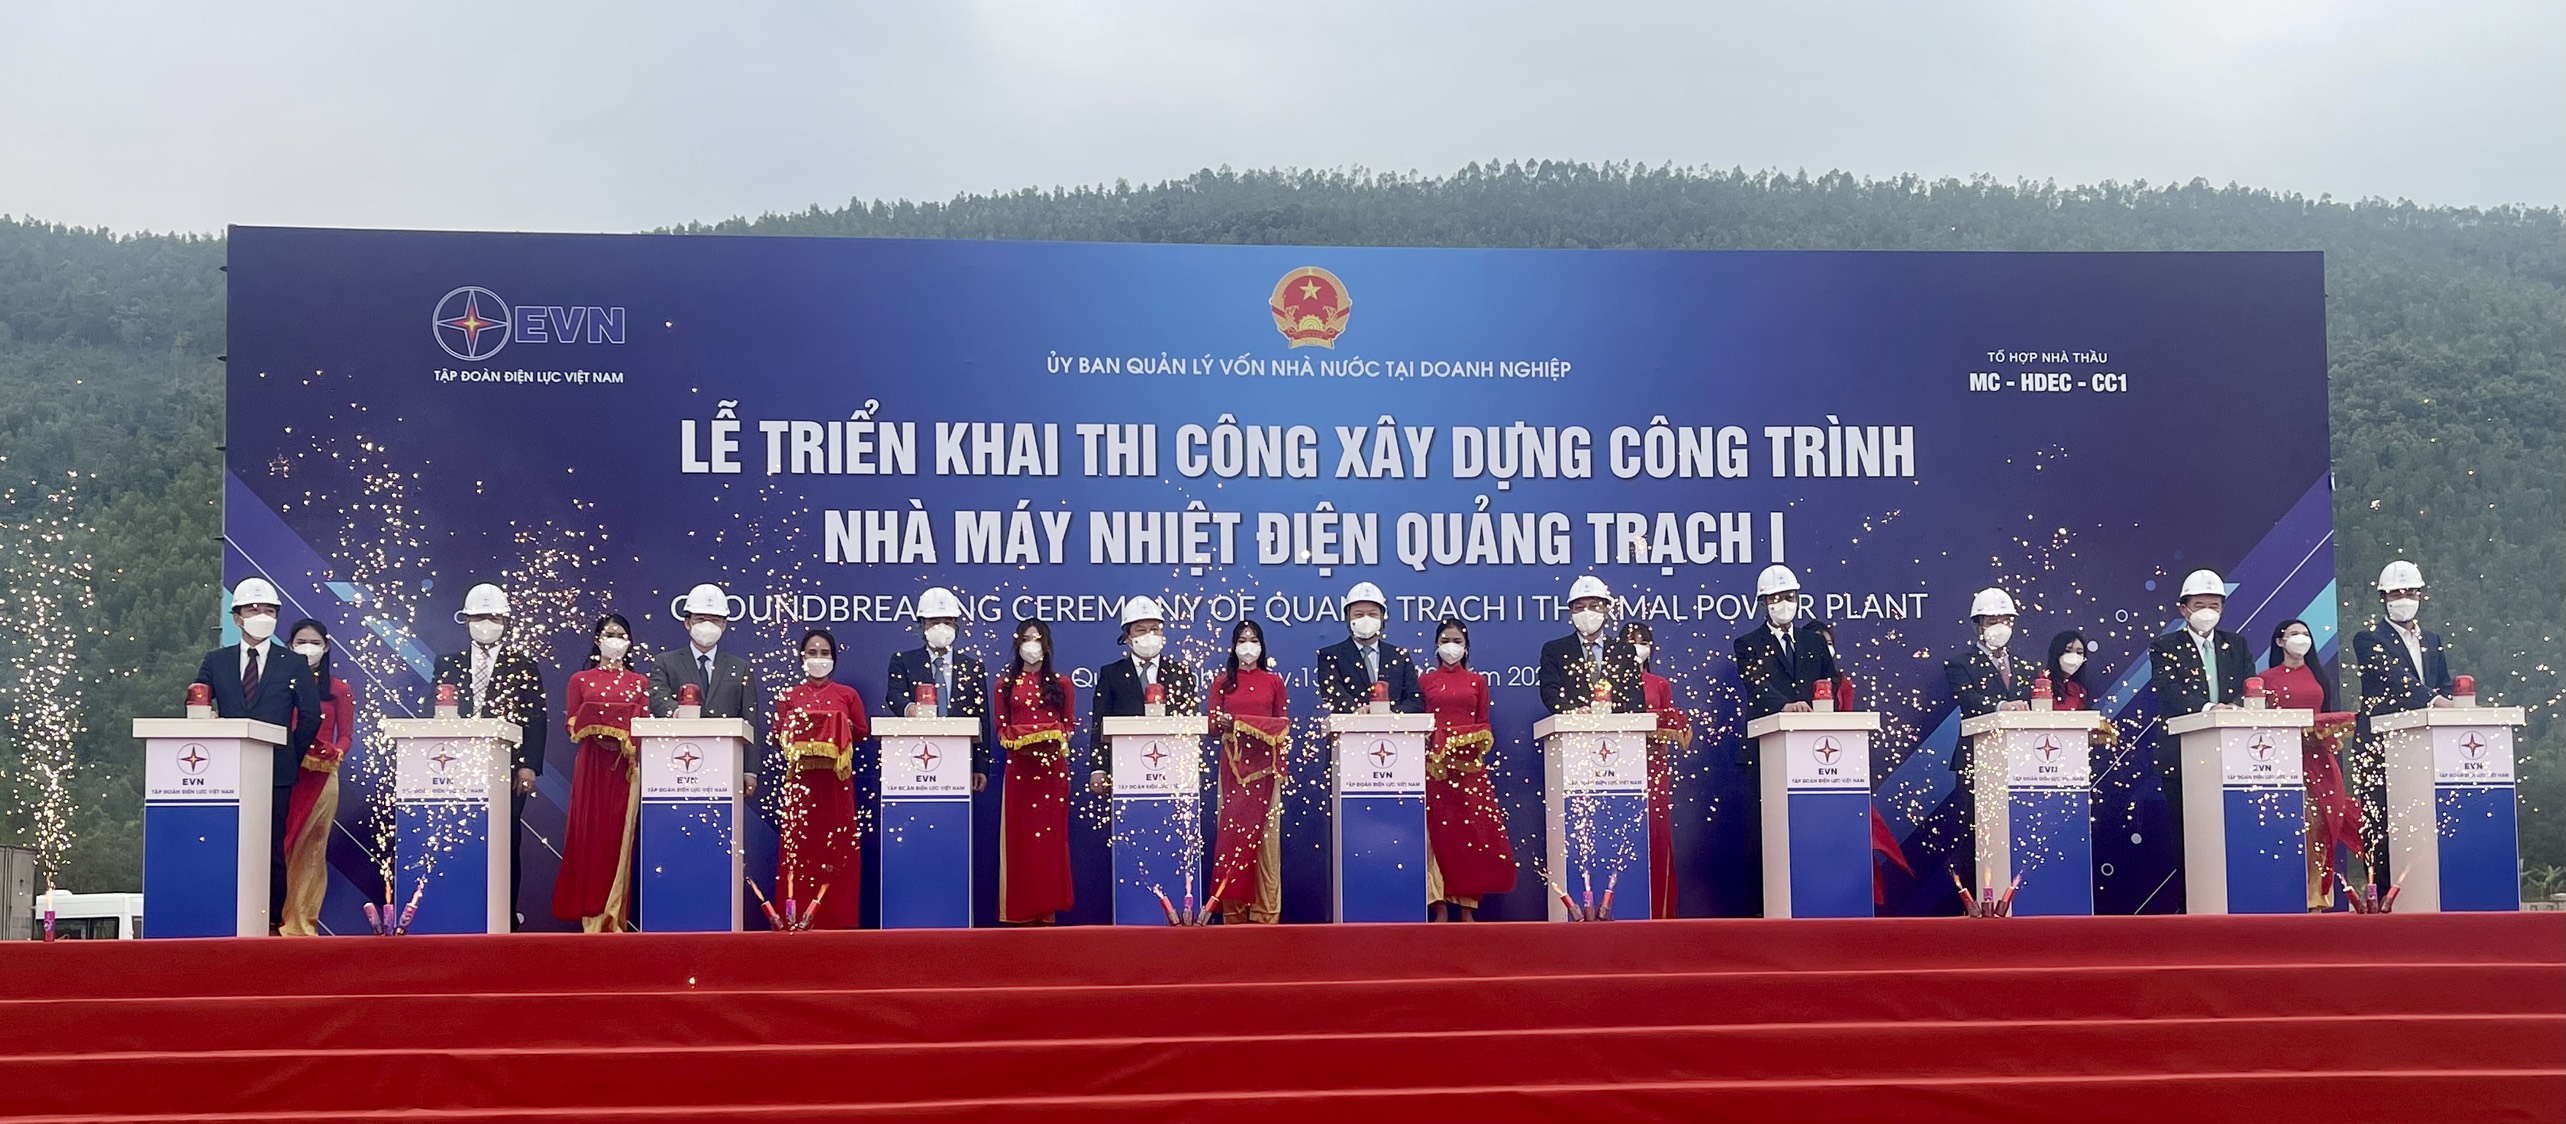 Work starts on $1.8bn thermal power plant in Vietnam